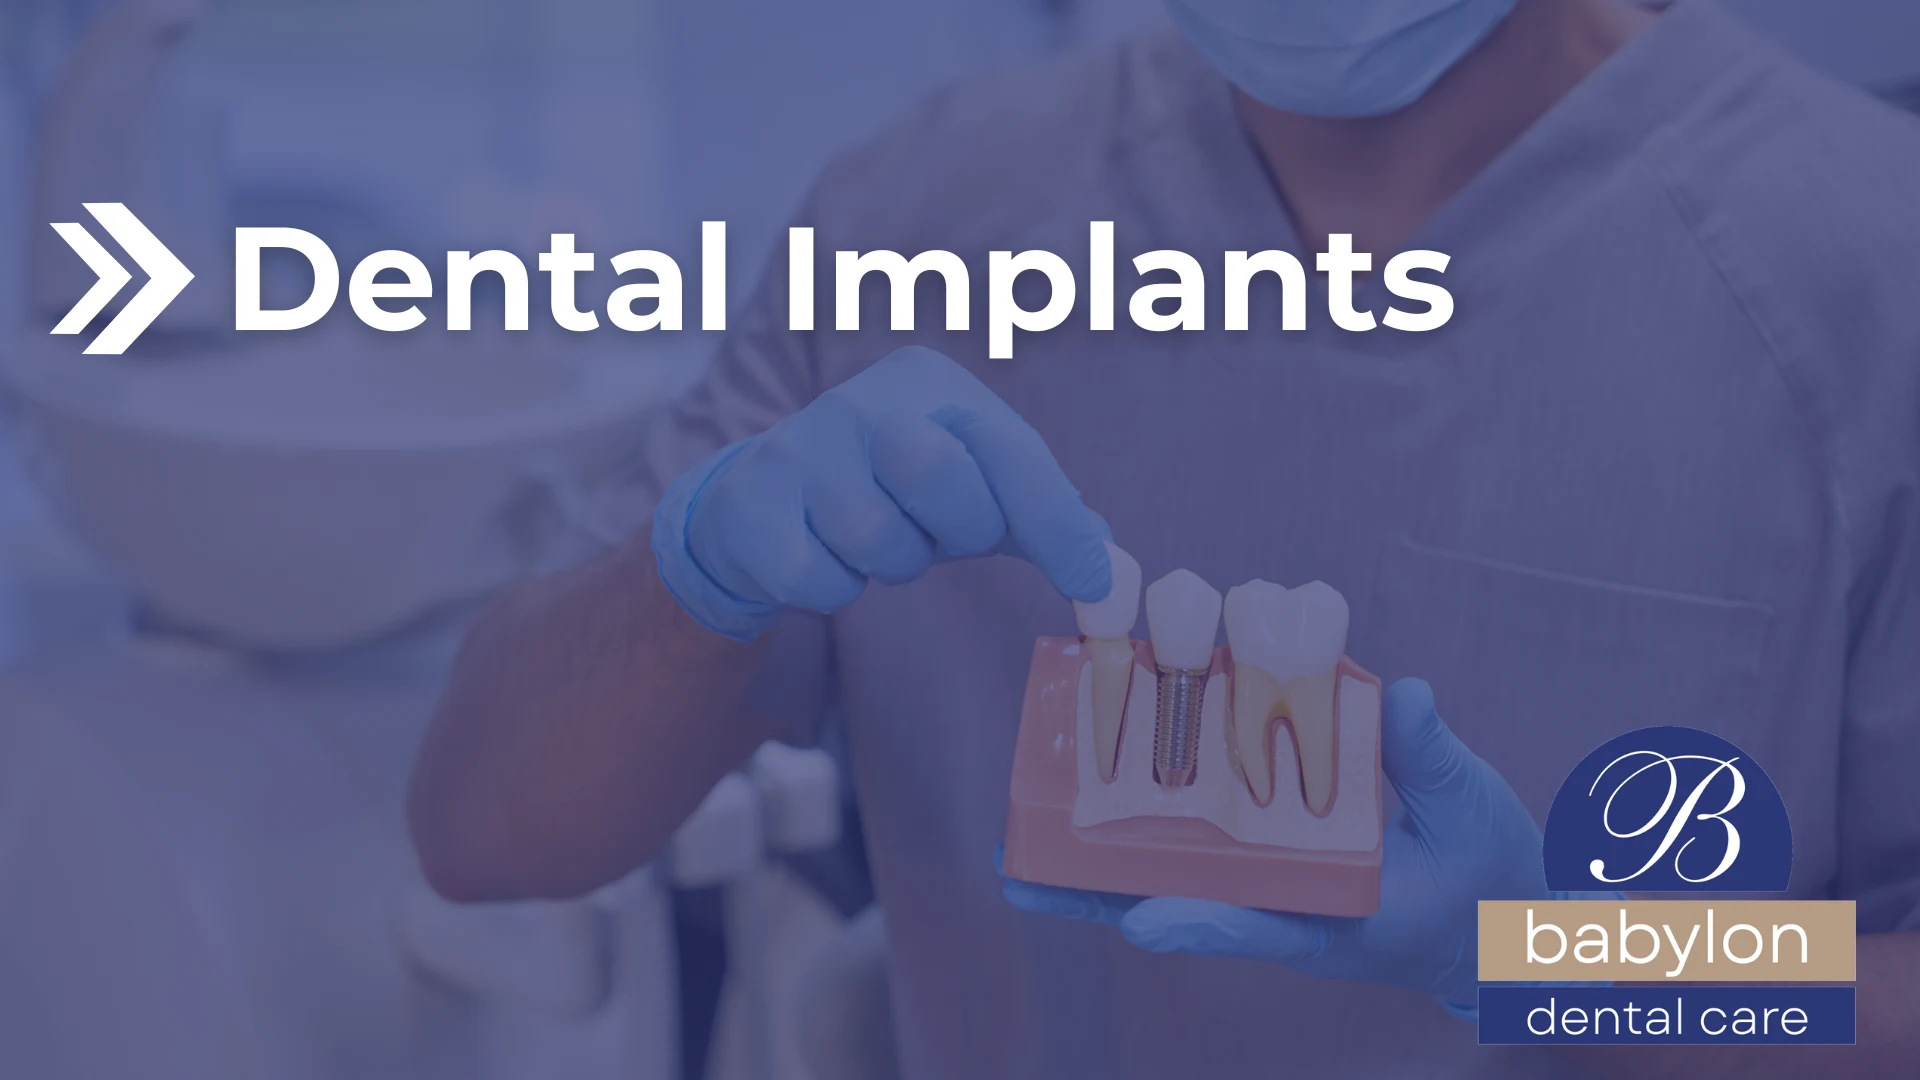 Dental Implants Image - new logo